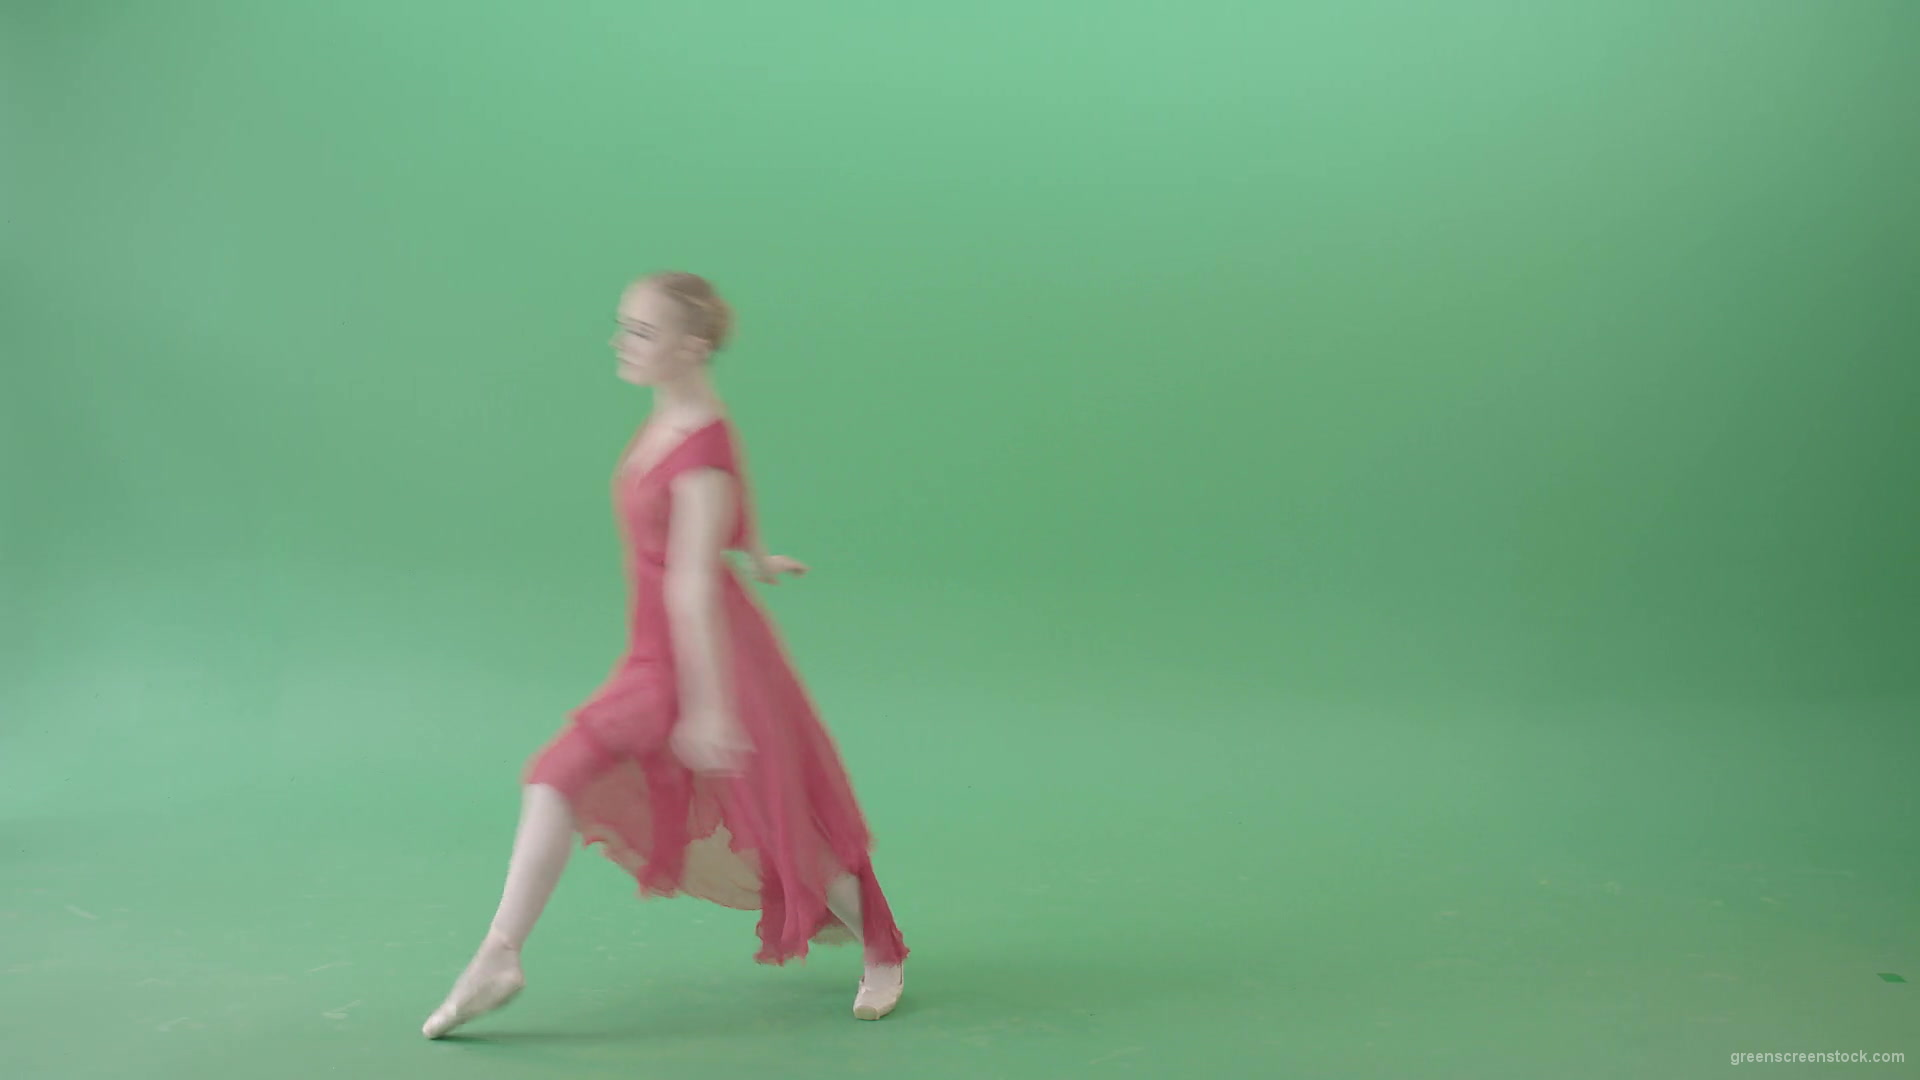 Light-Ballet-dancing-girl-in-red-wind-dress-spinning-on-green-screen-4K-Video-Footage-1920_009 Green Screen Stock